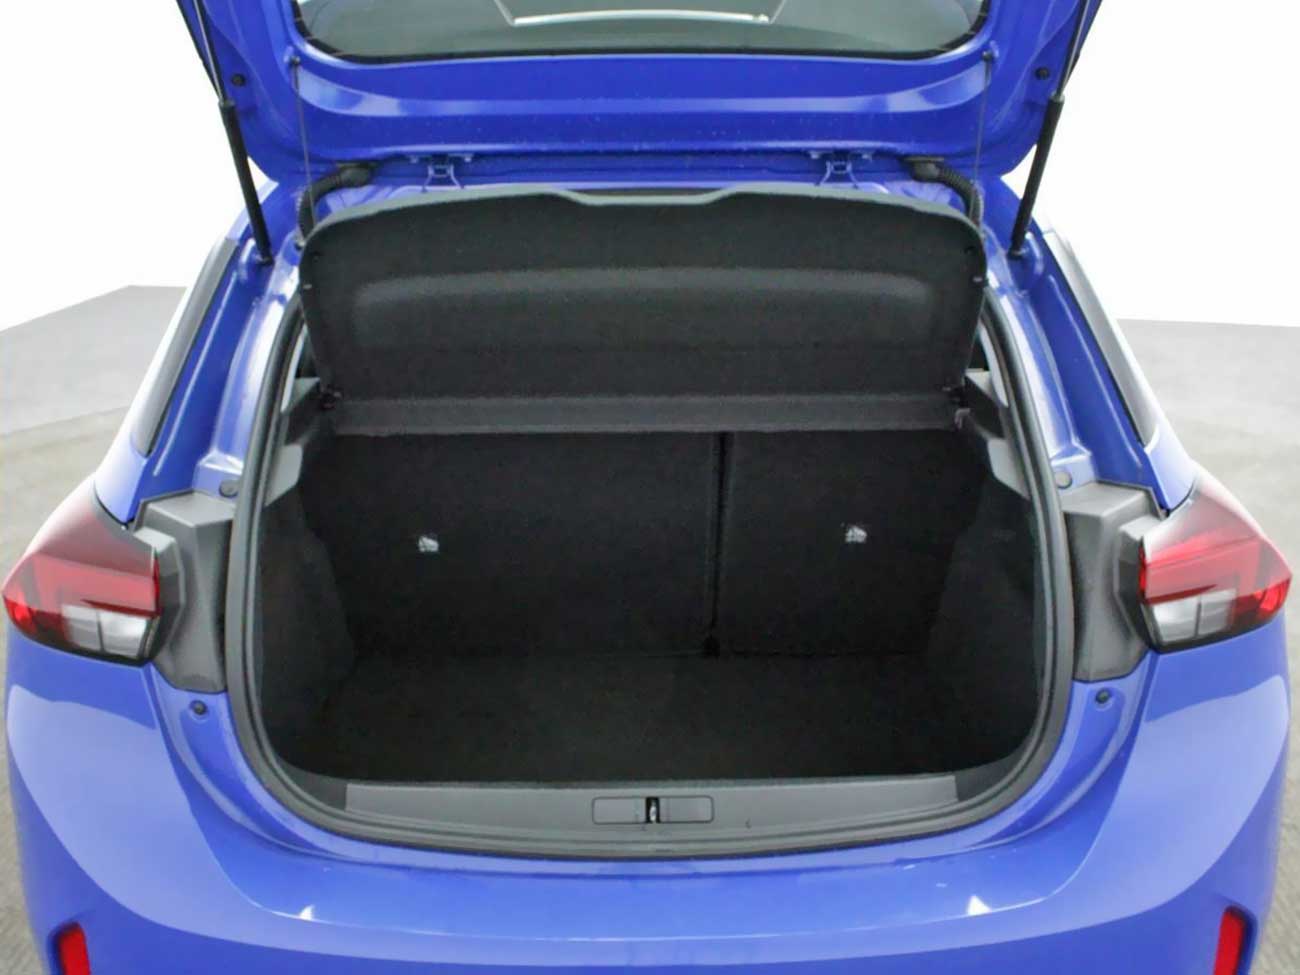 Vauxhall Corsa boot view